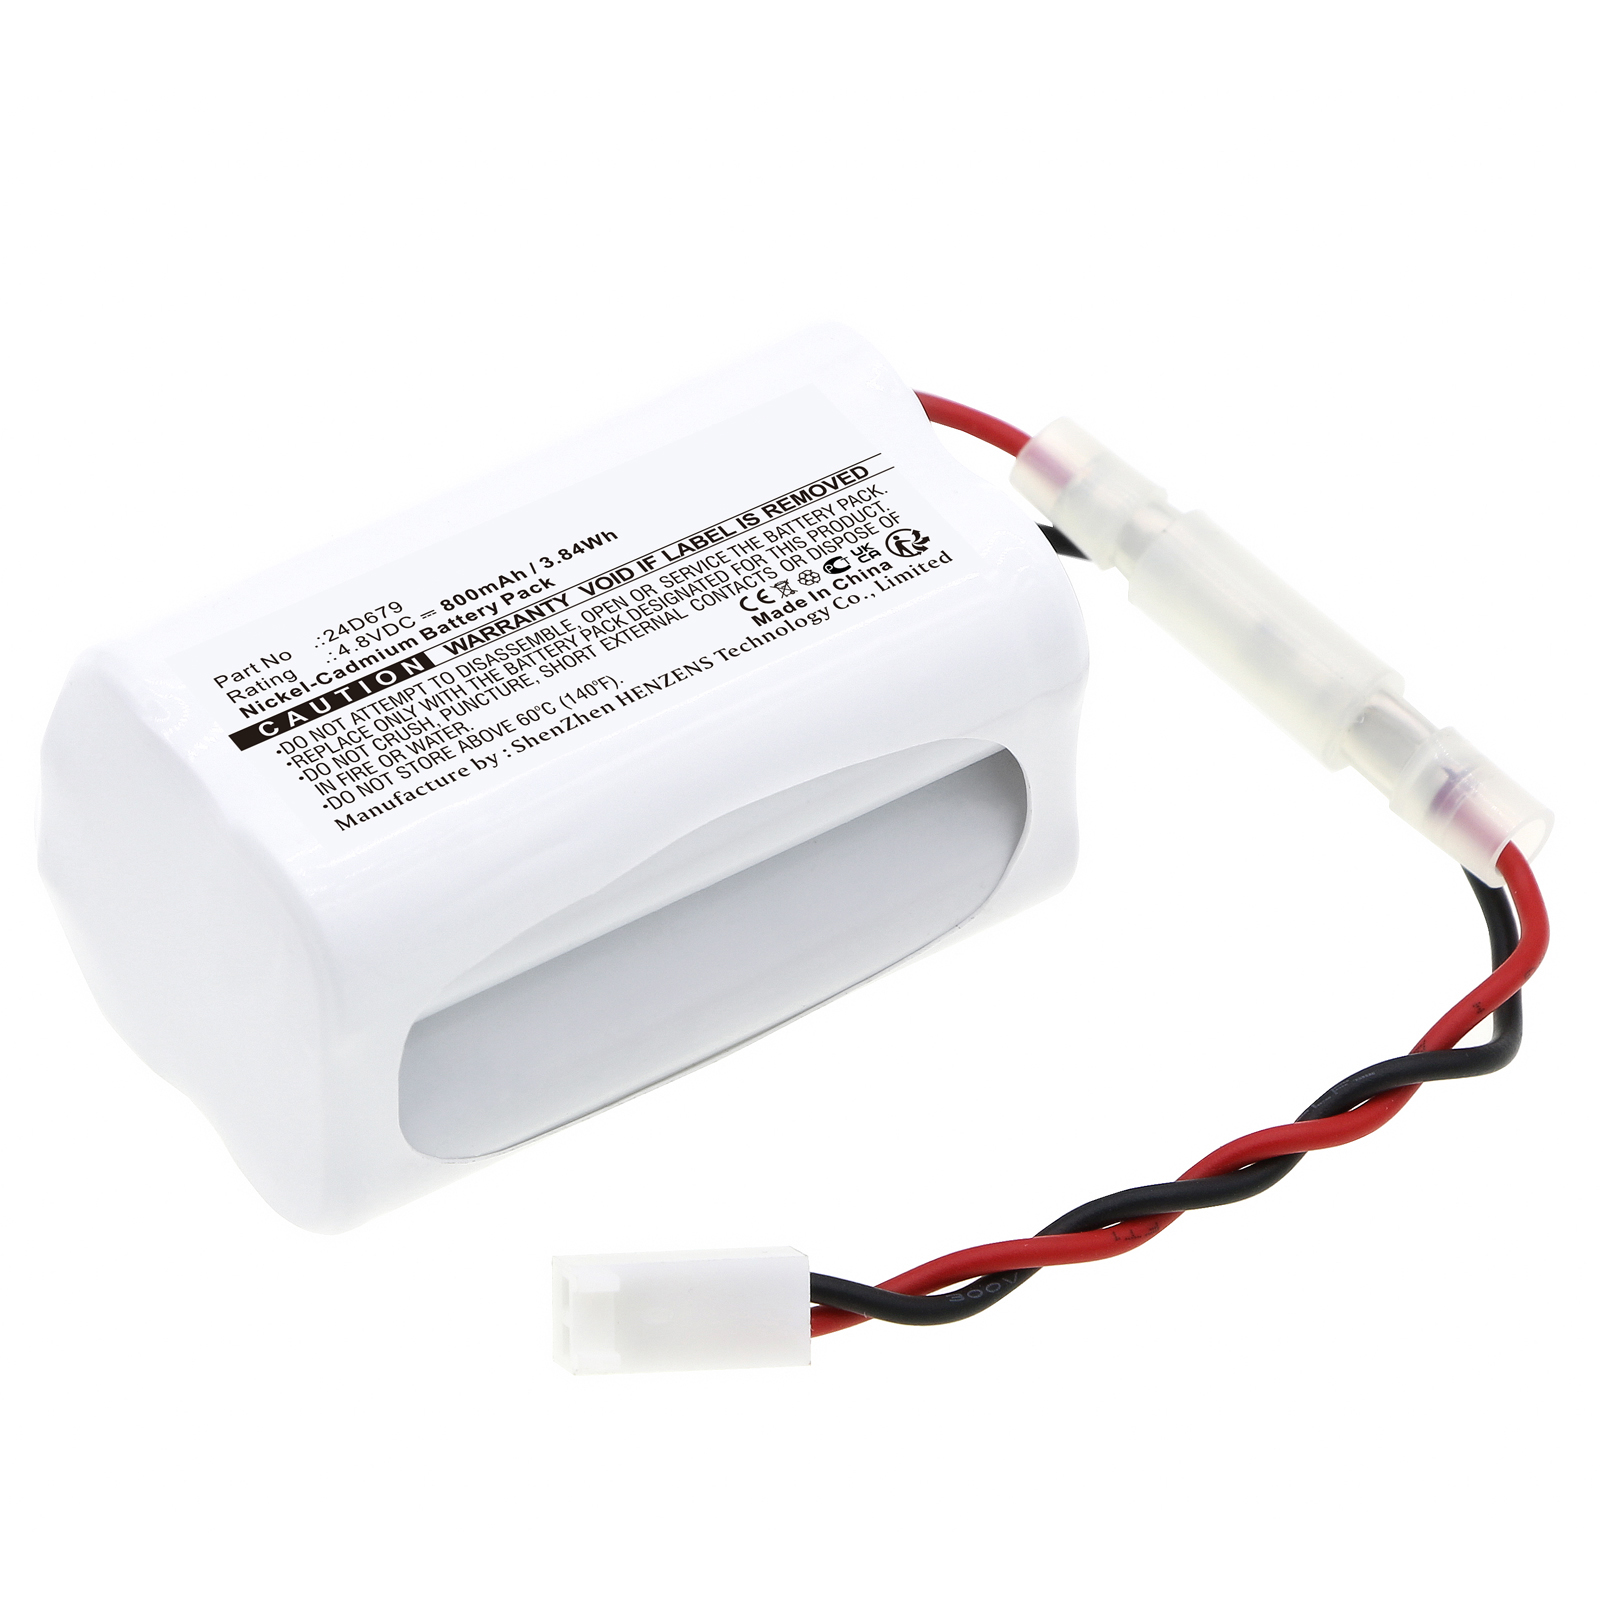 Synergy Digital Emergency Lighting Battery, Compatible with DUAL-LITE 929842-6 Emergency Lighting Battery (Ni-CD, 4.8V, 800mAh)